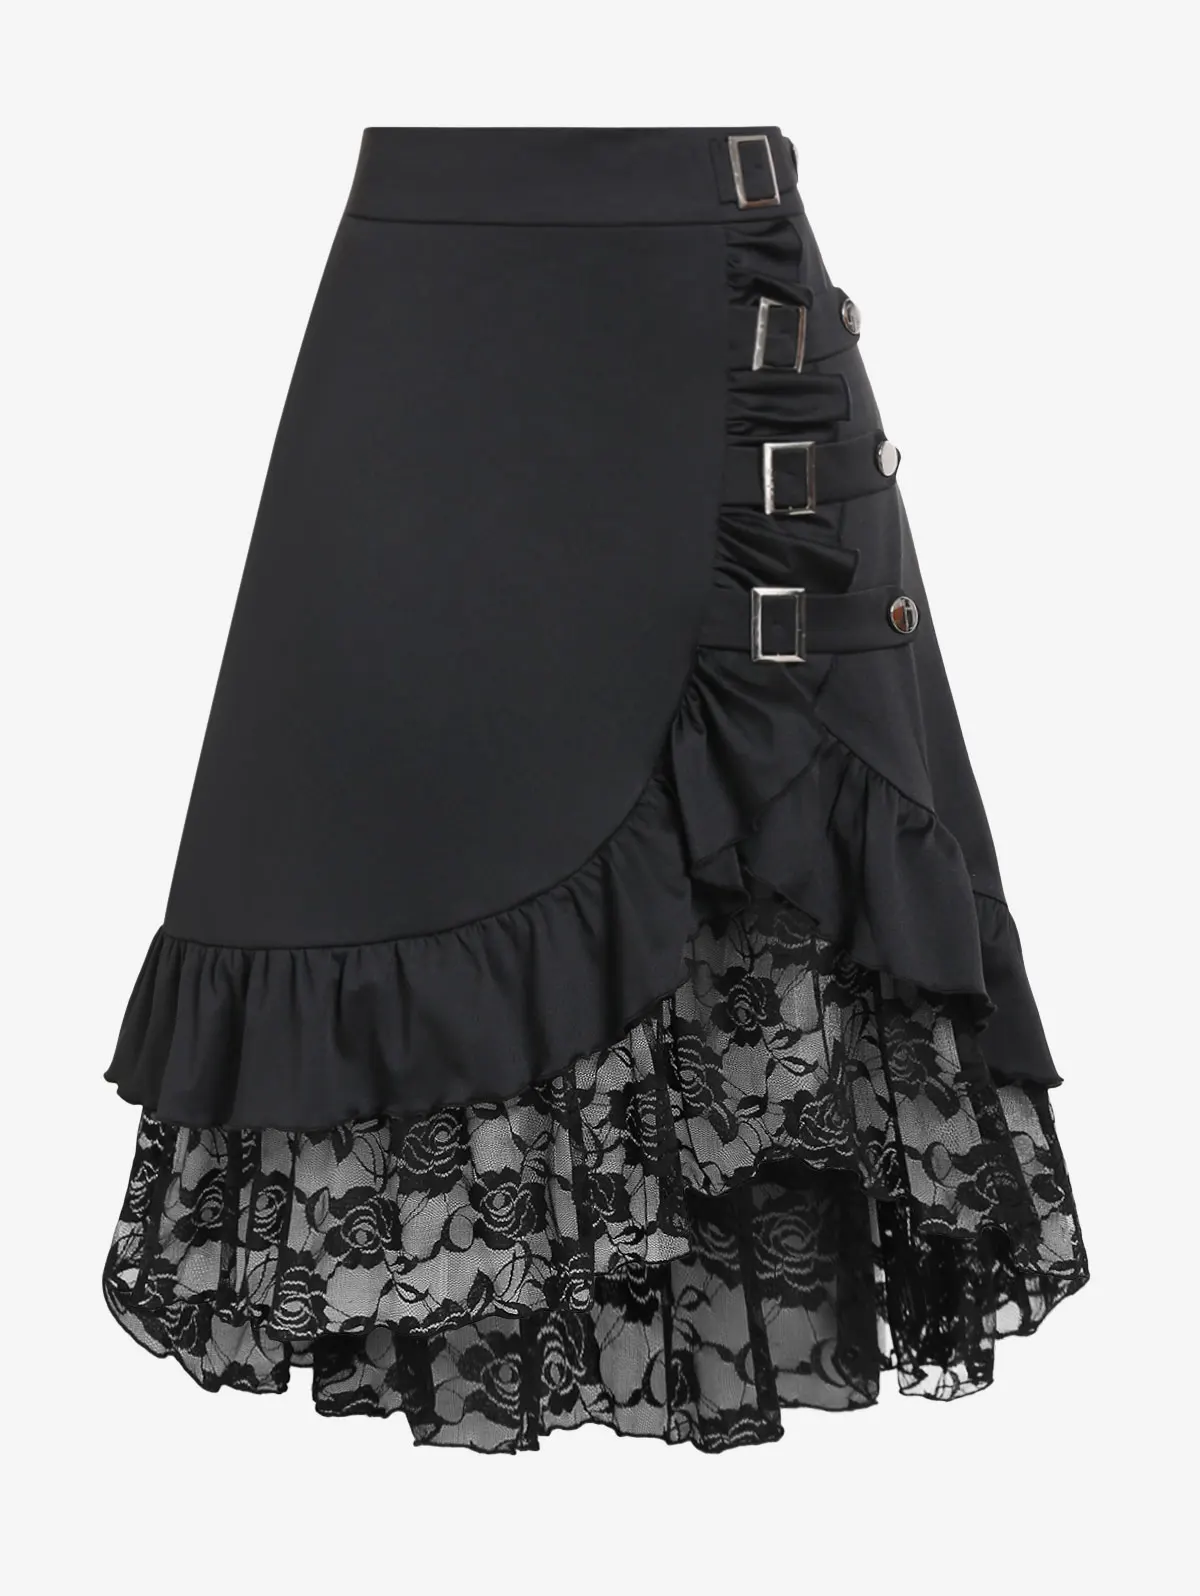 

ROSEGAL Plus Size Flounce Lace Panel Tulip Skirts Gothic High Waist Buckles Midi Skirt Black Women Basics Streetwear Skirt 5XL